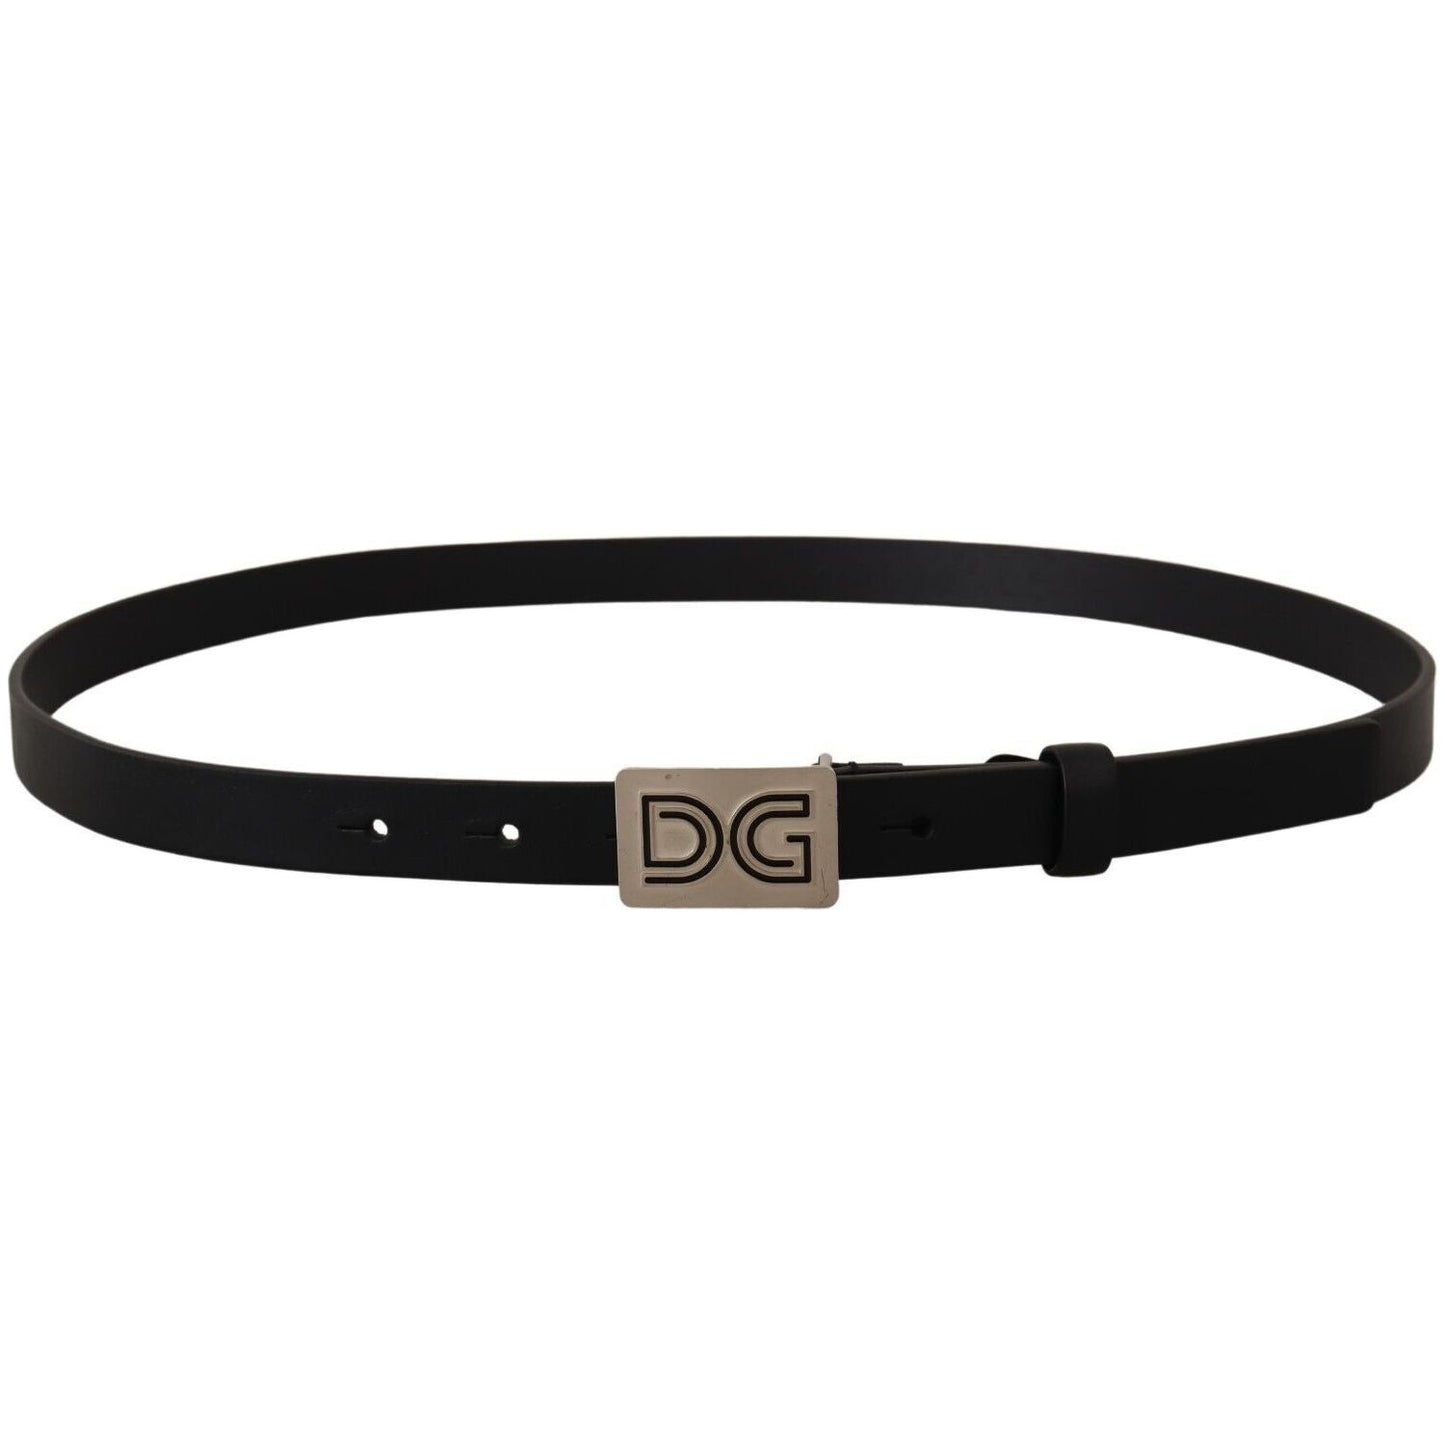 Dolce & Gabbana Elegant Black Leather Belt with Silver Buckle black-leather-silver-dg-logo-buckle-belt s-l1600-1-230-71dde77e-0cd.jpg